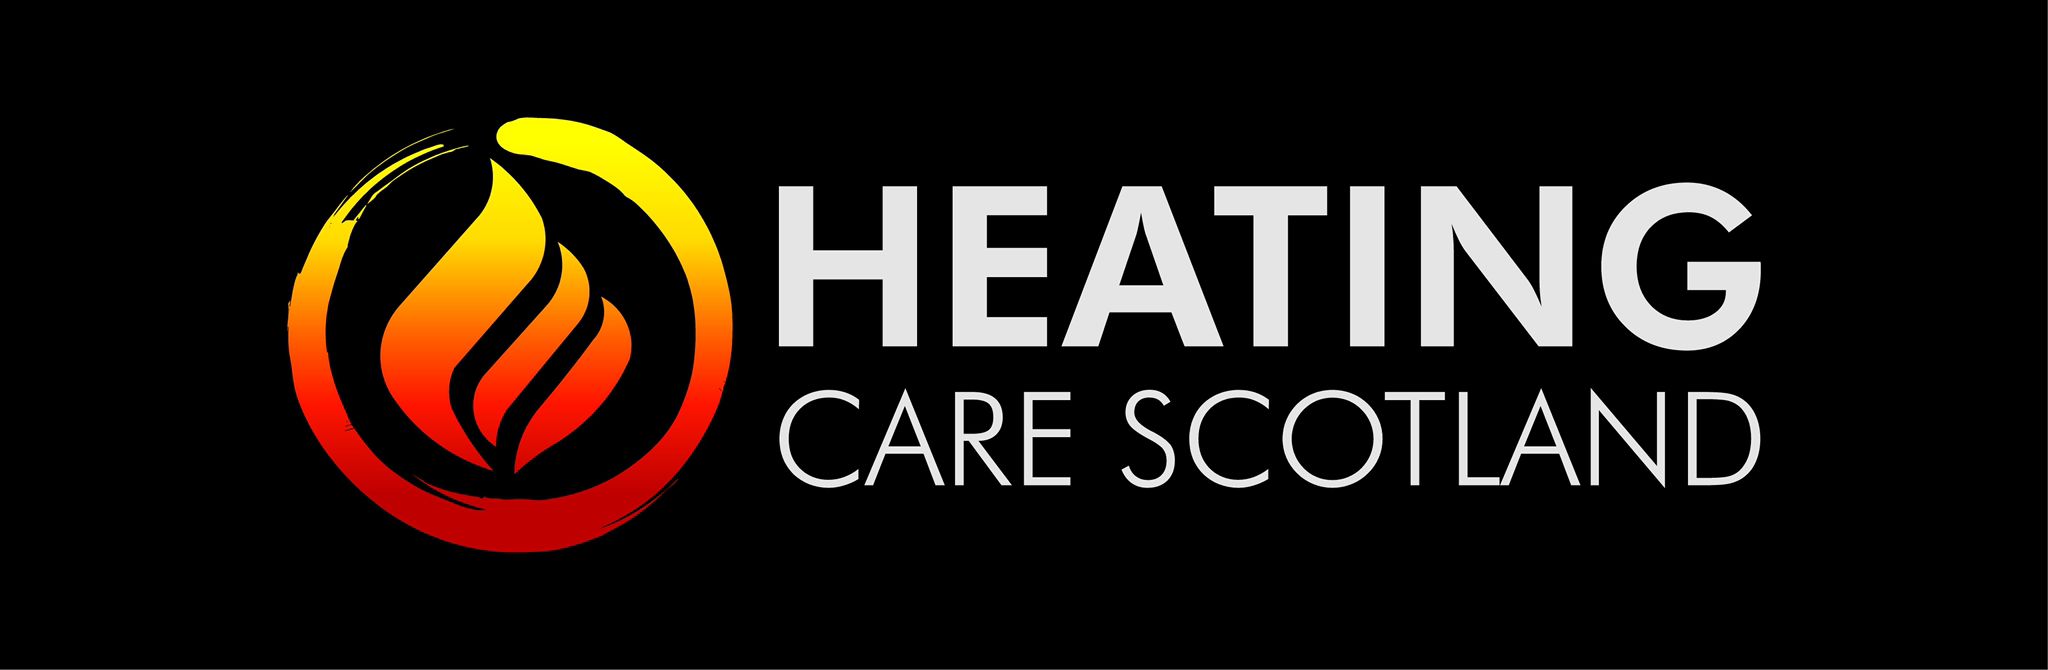 Heating Care Scotland